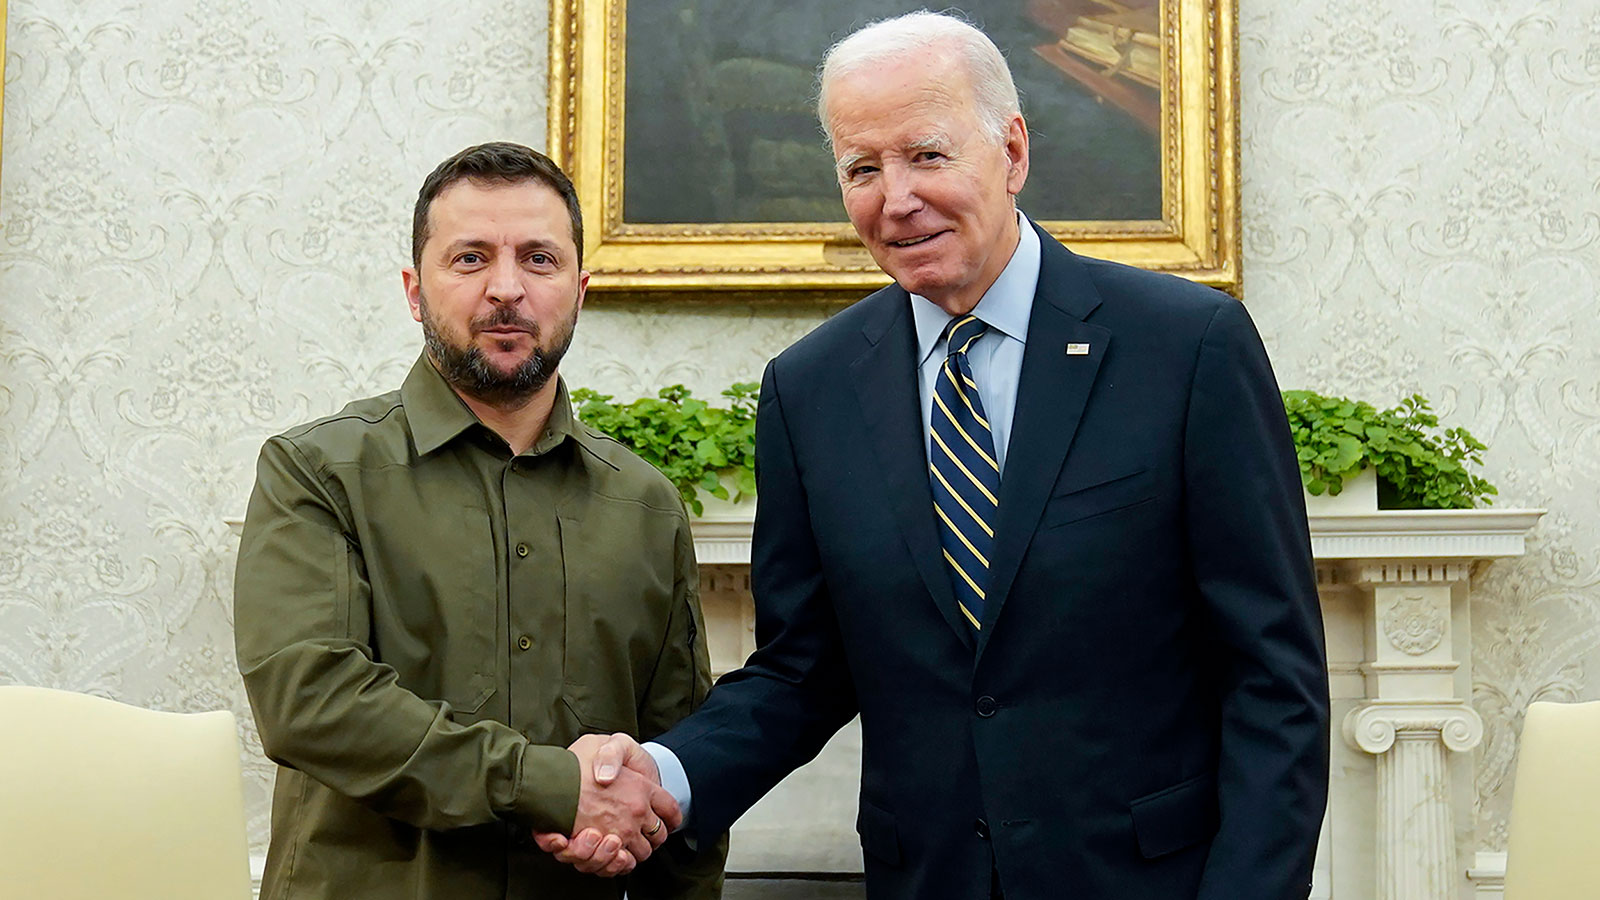 President Joe Biden shakes hands with Ukrainian President Volodymyr Zelensky as they meet in the Oval Office of the White House, Thursday, September 21, 2023, in Washington, DC. 